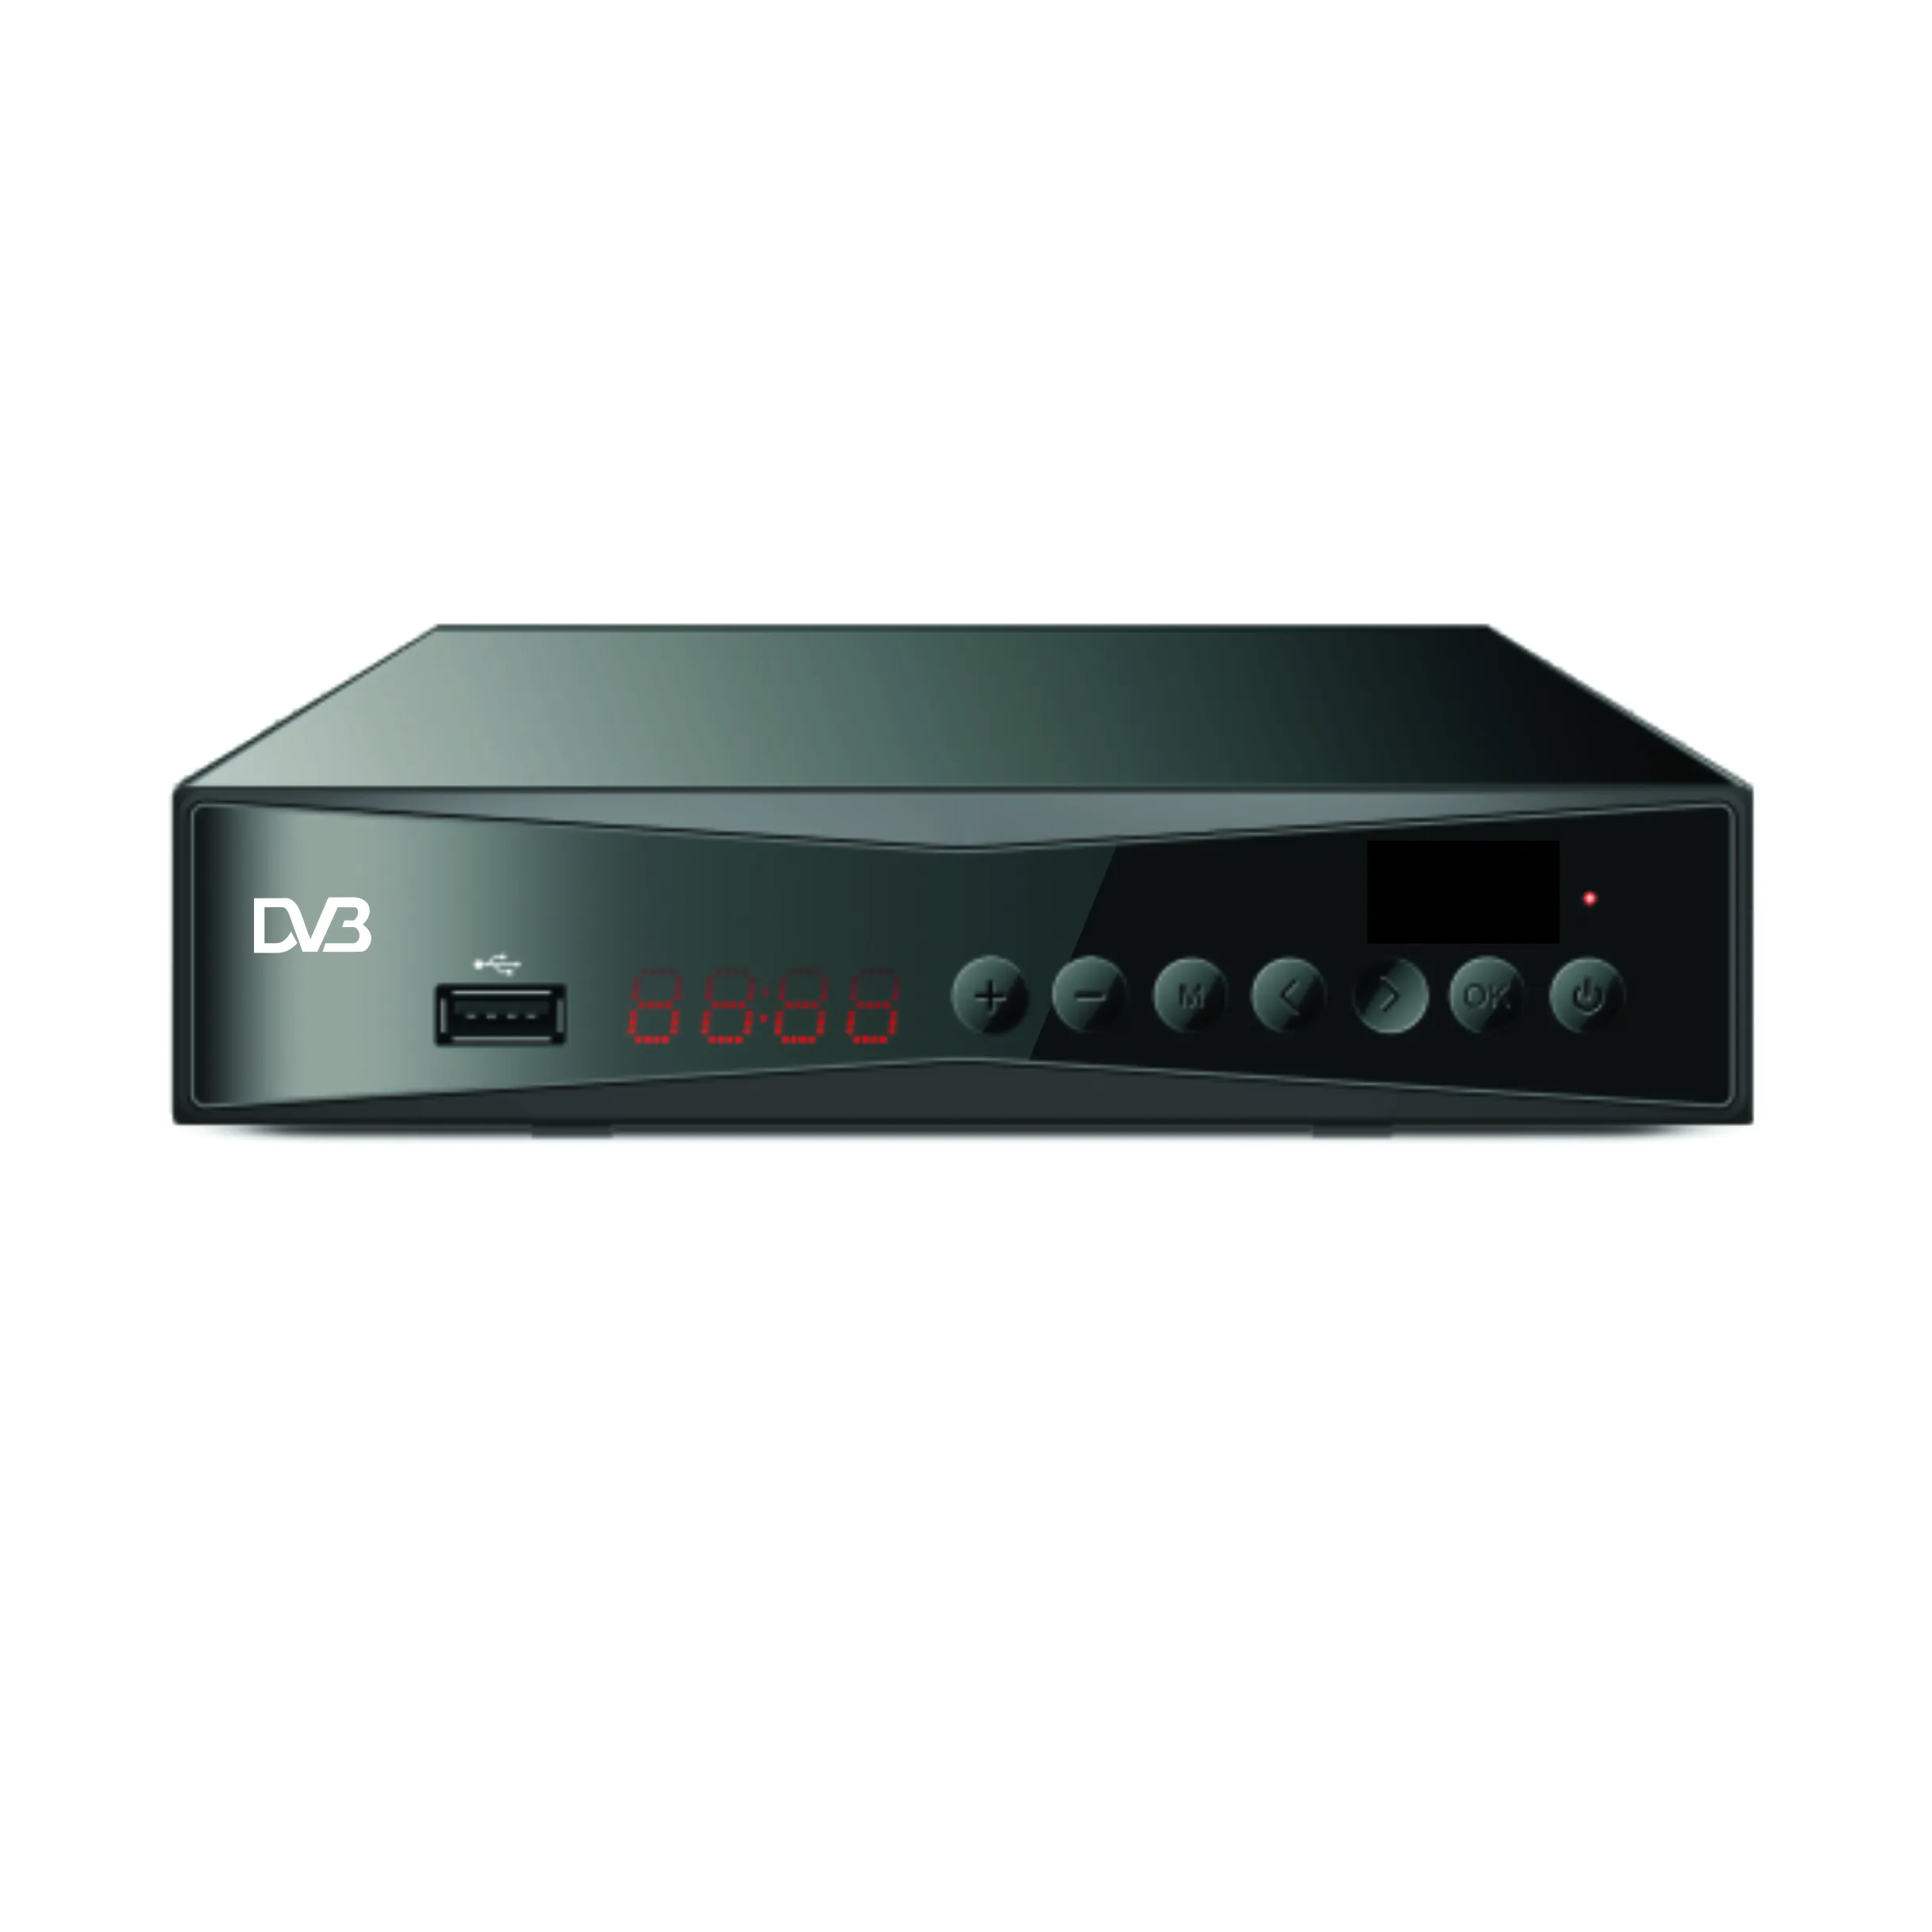 DvbT2セットトップボックス新製品カスタマイズされたインドネシアデジタルMPEG4HD DVB-T2サポートEWSDVBT2TVデコーダーセットトップボックス